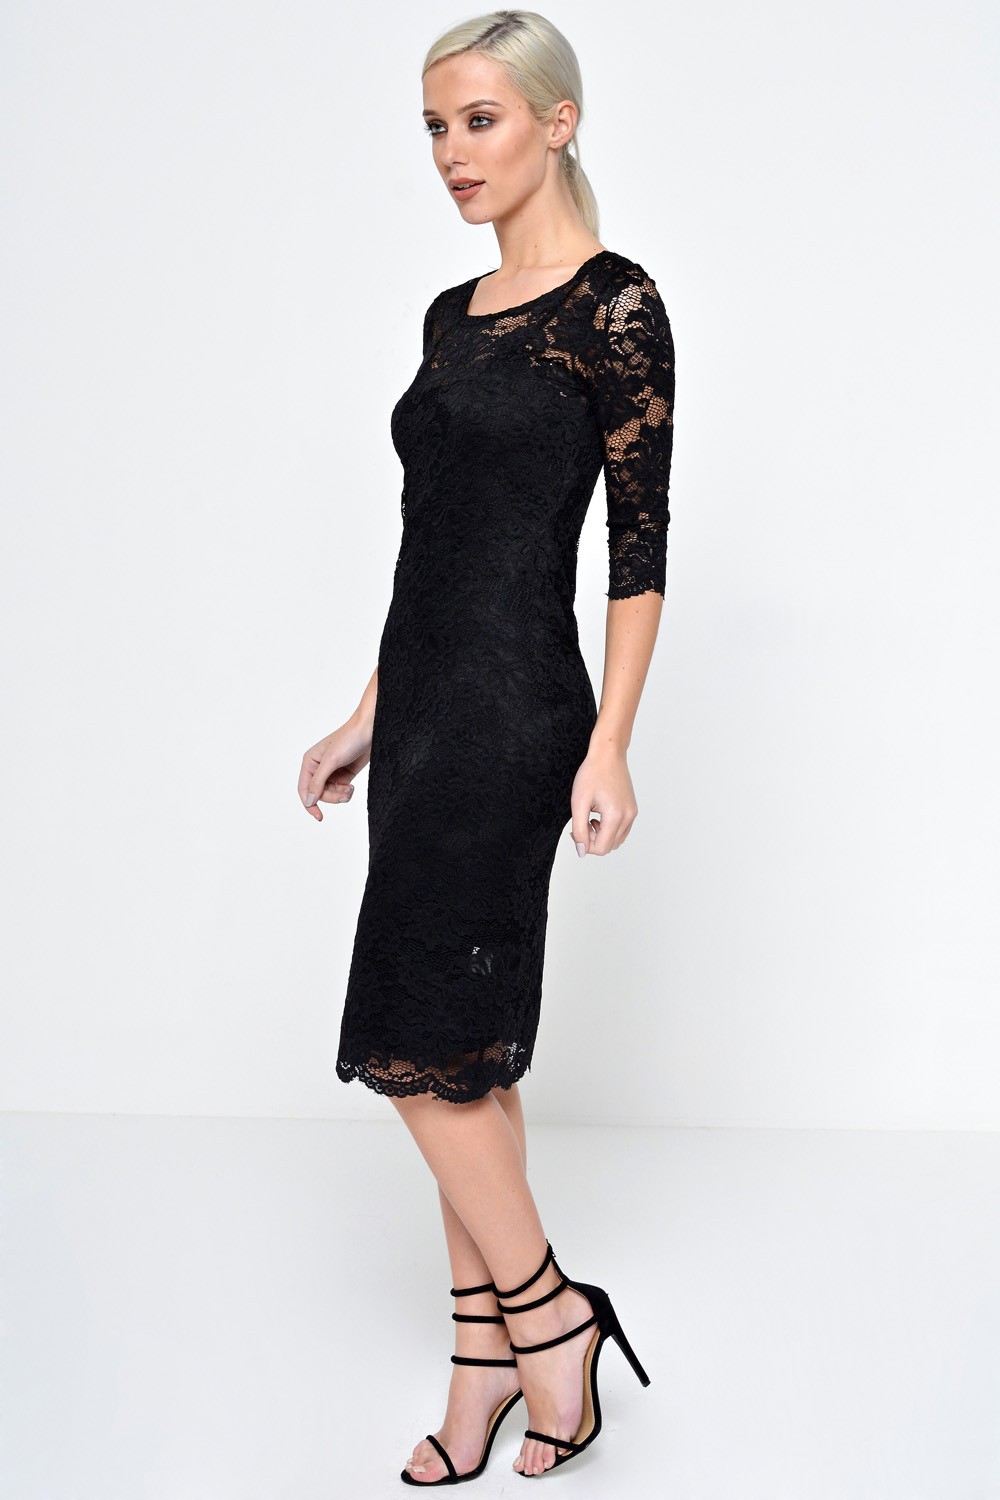 Stella Carina Lace Pencil Dress in Black | iCLOTHING